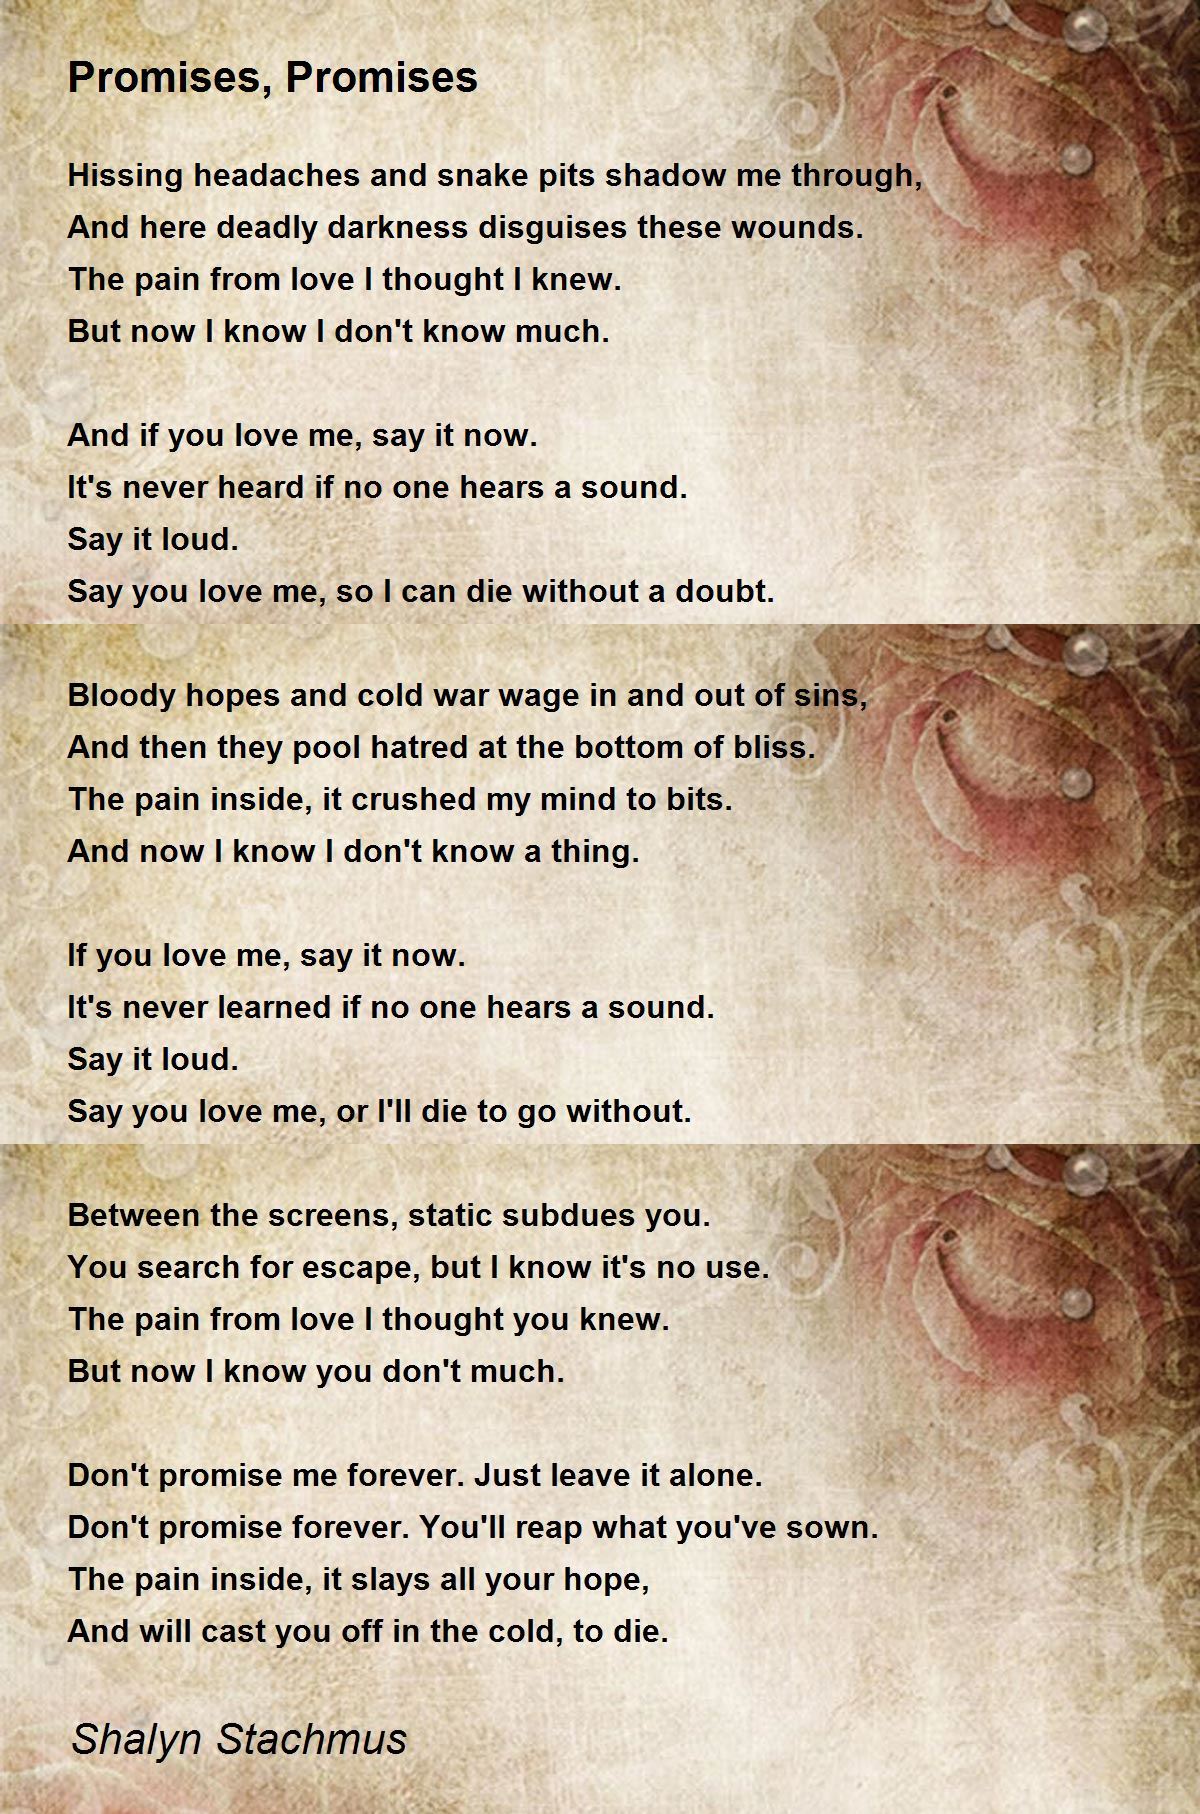 Promises, Promises Poem by Shalyn Stachmus - Poem Hunter